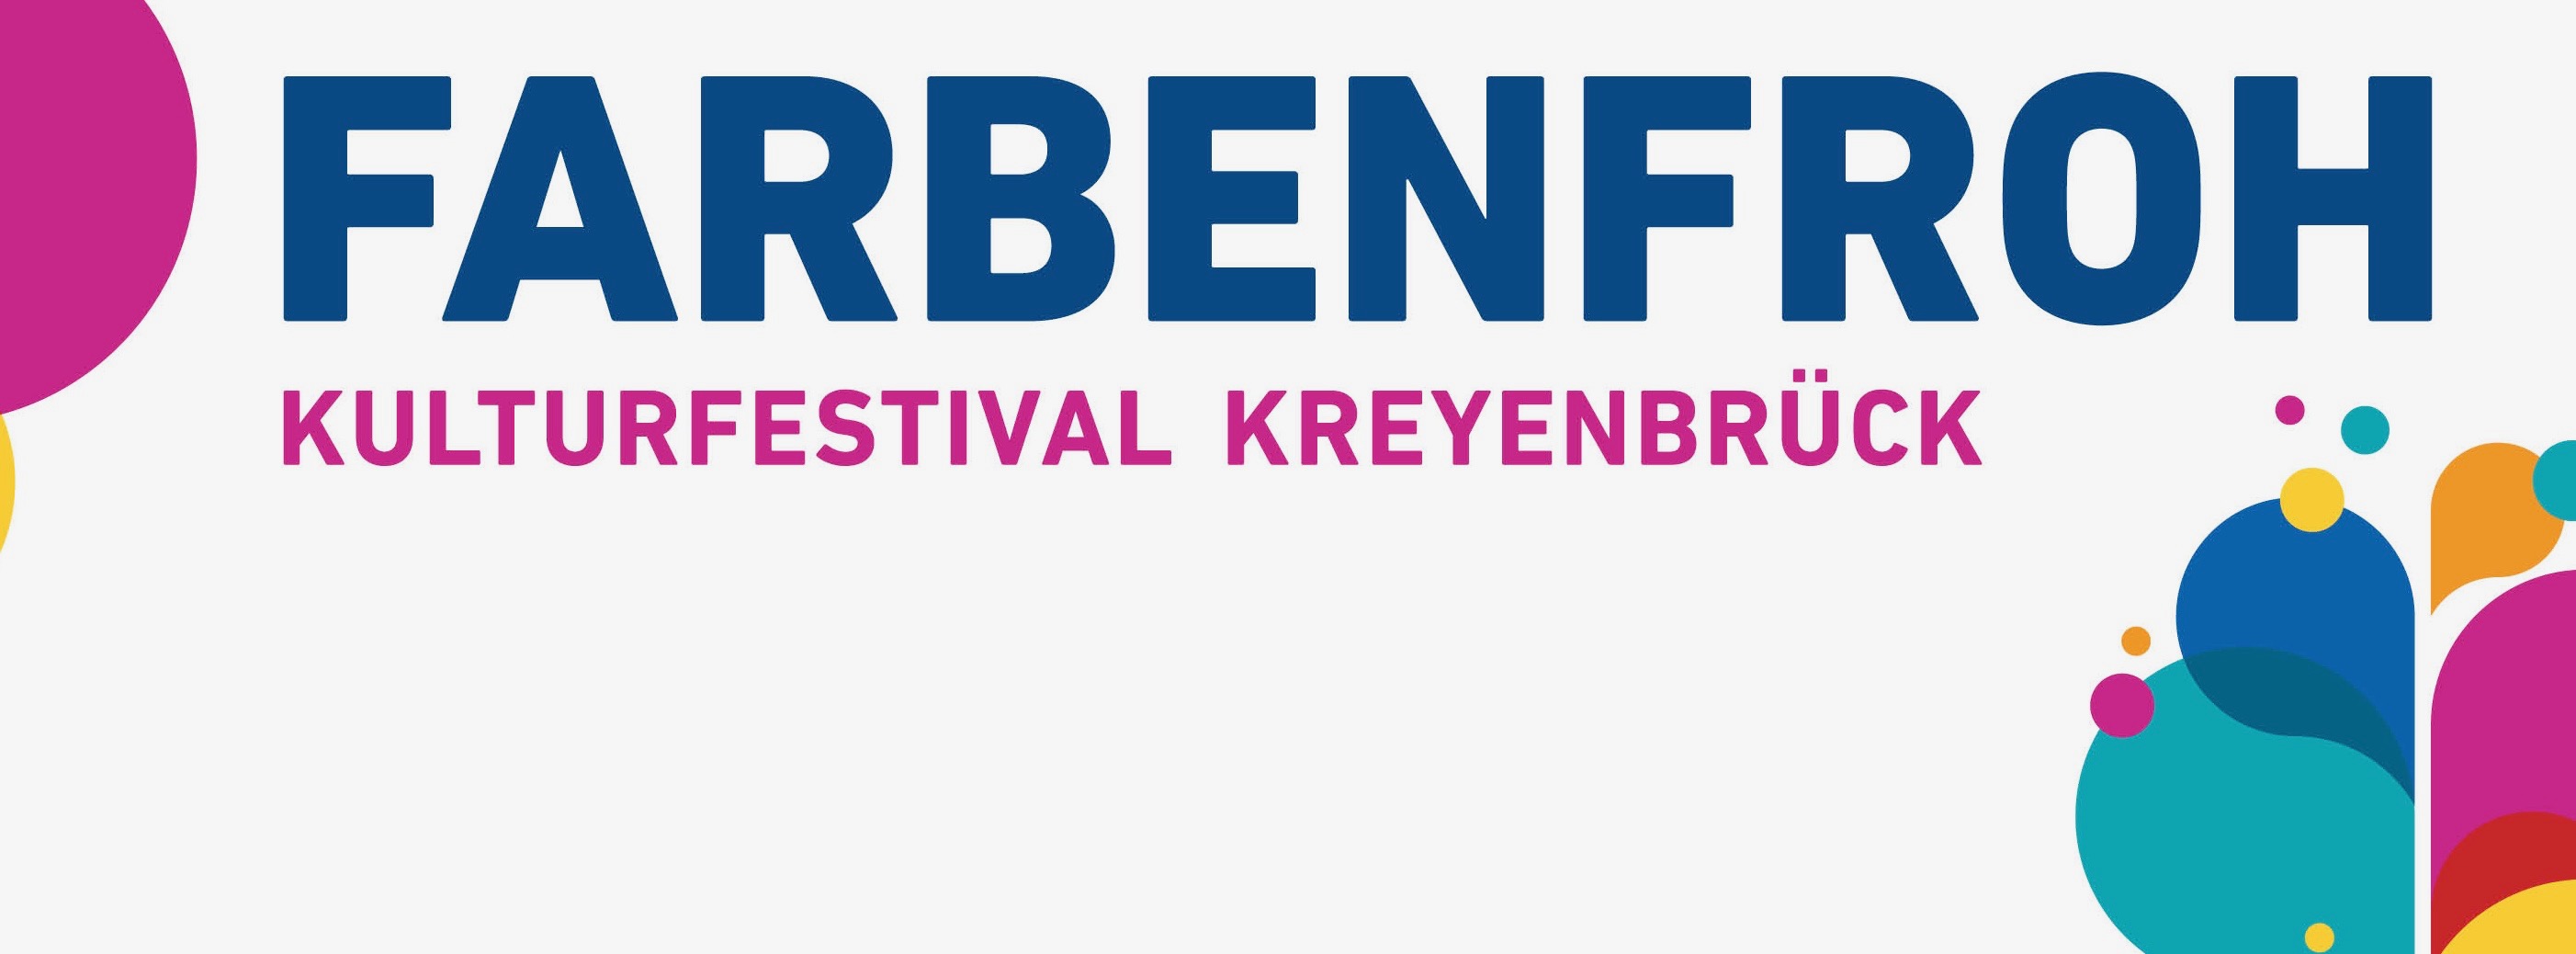 FARBENFROH / Kulturfestival Kreyenbrück  Logo